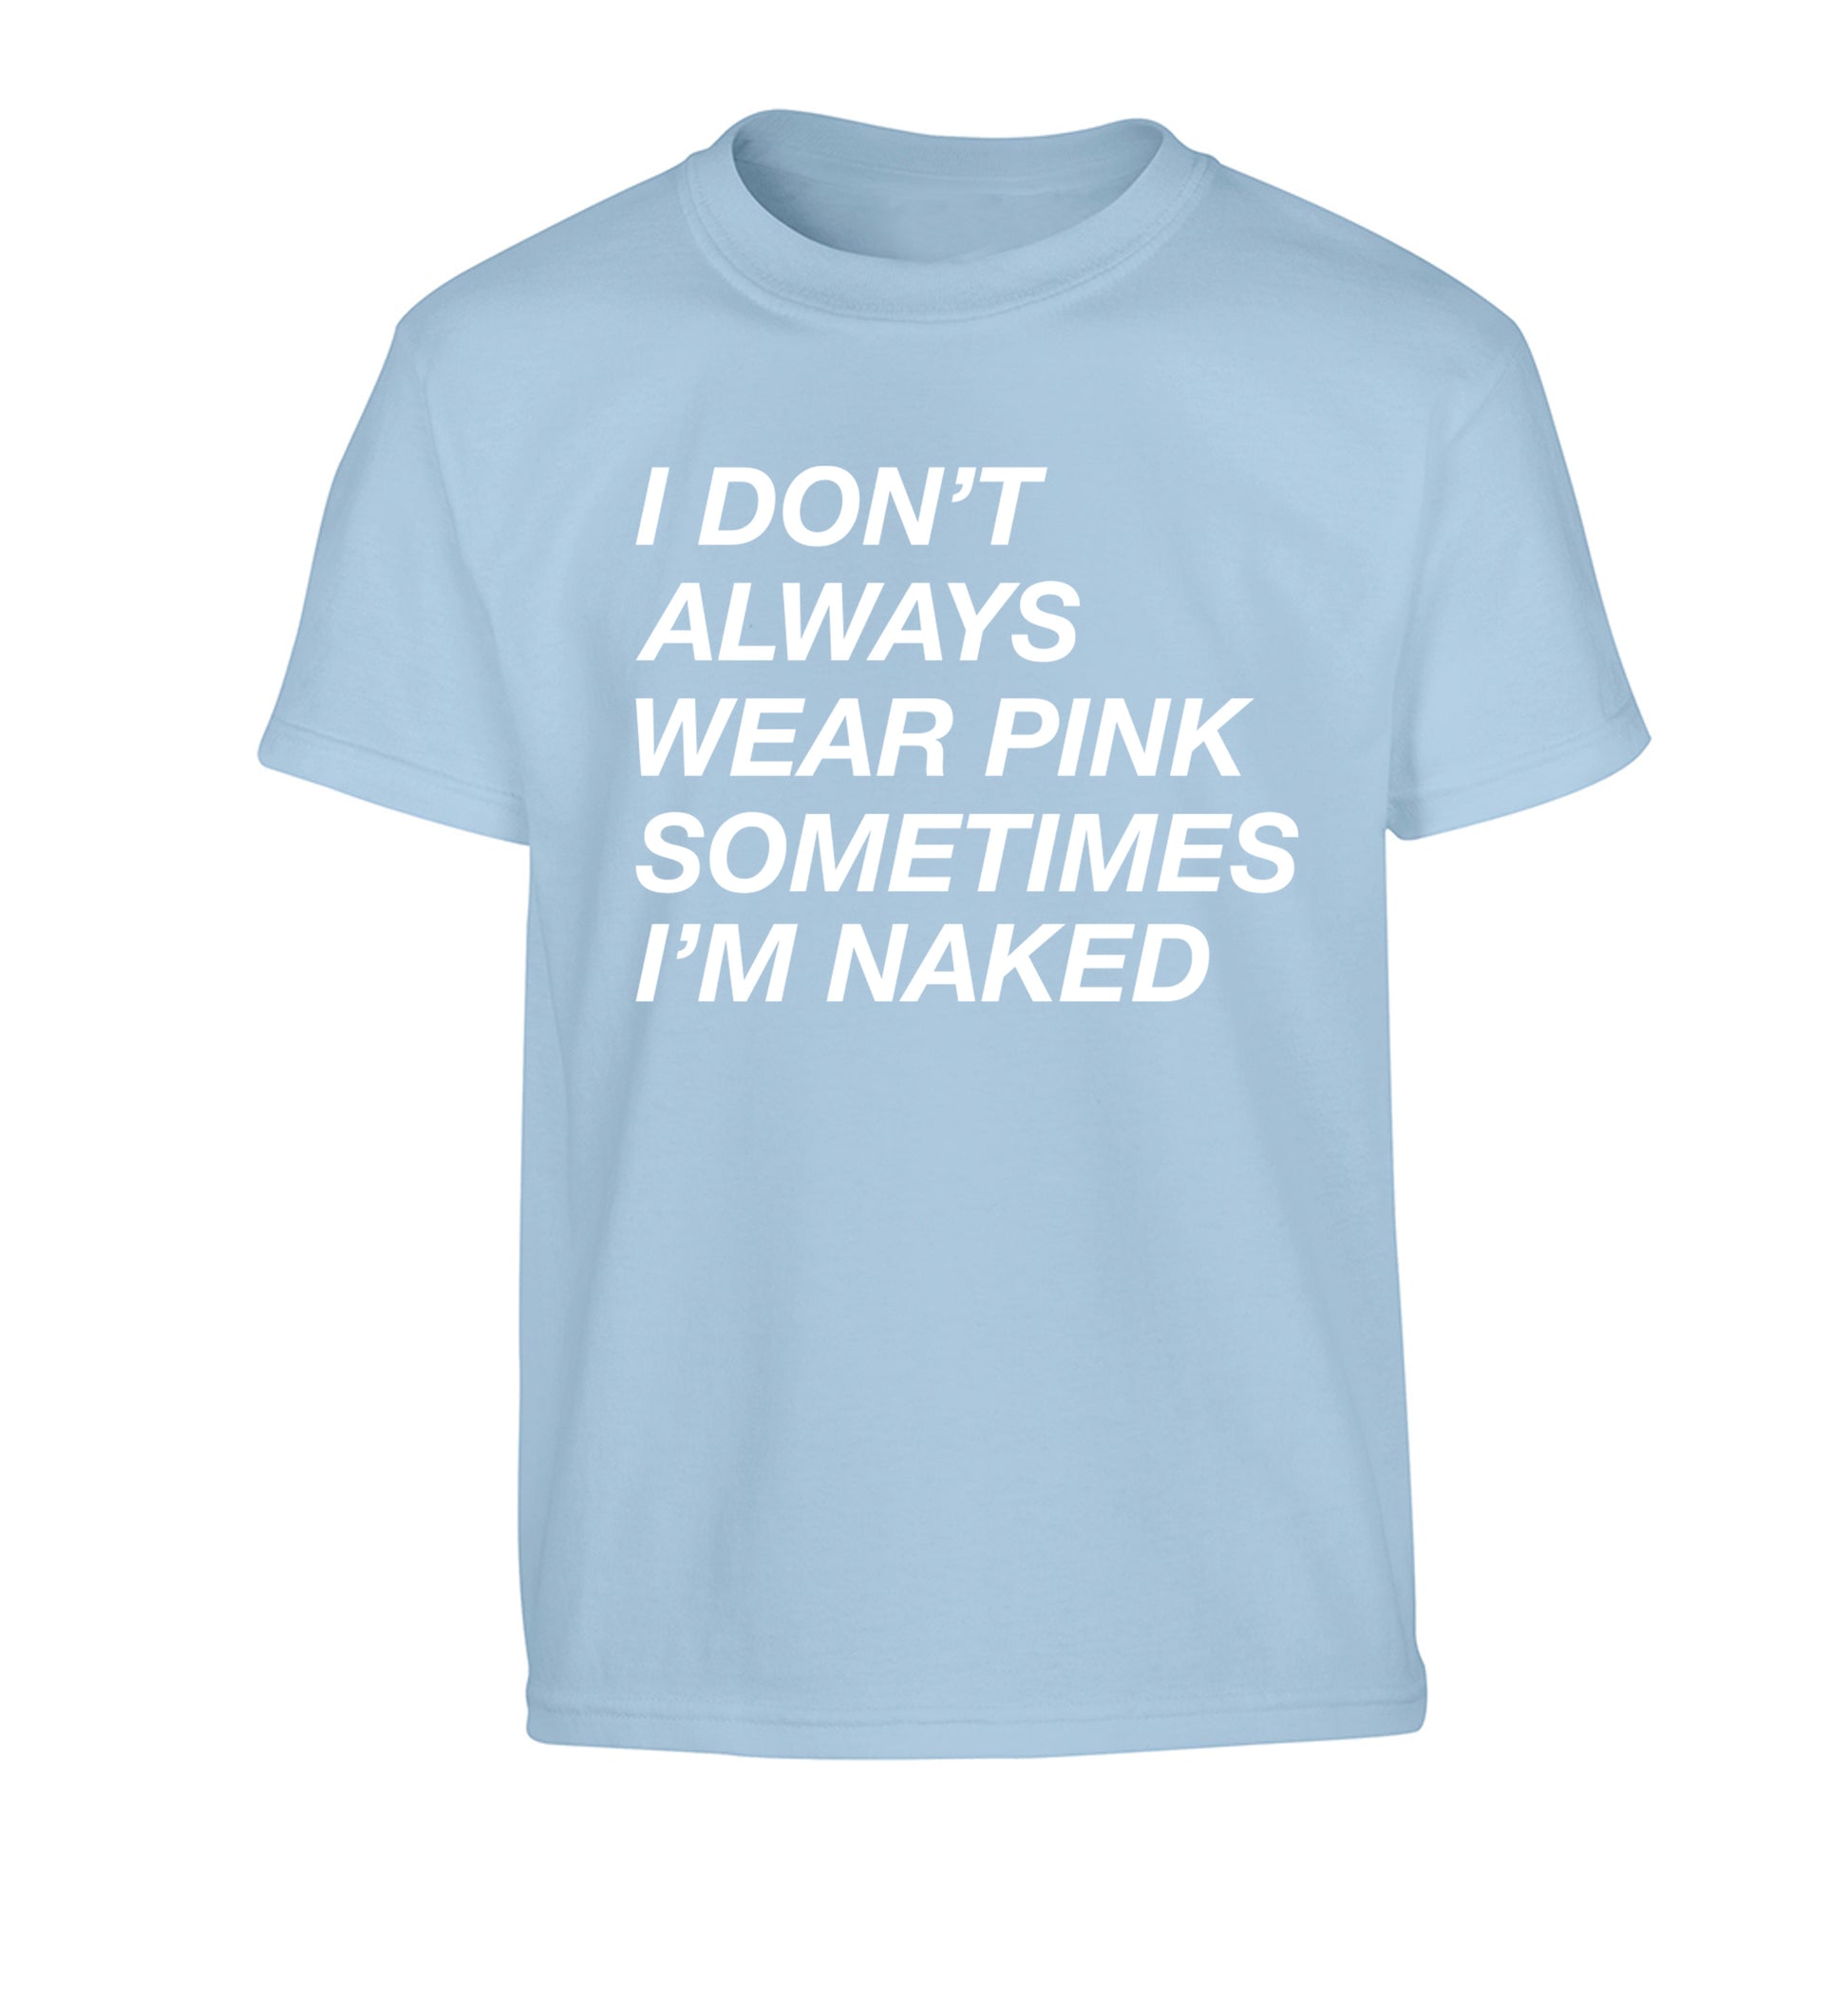 I don't always wear pink sometimes I'm naked Children's light blue Tshirt 12-13 Years